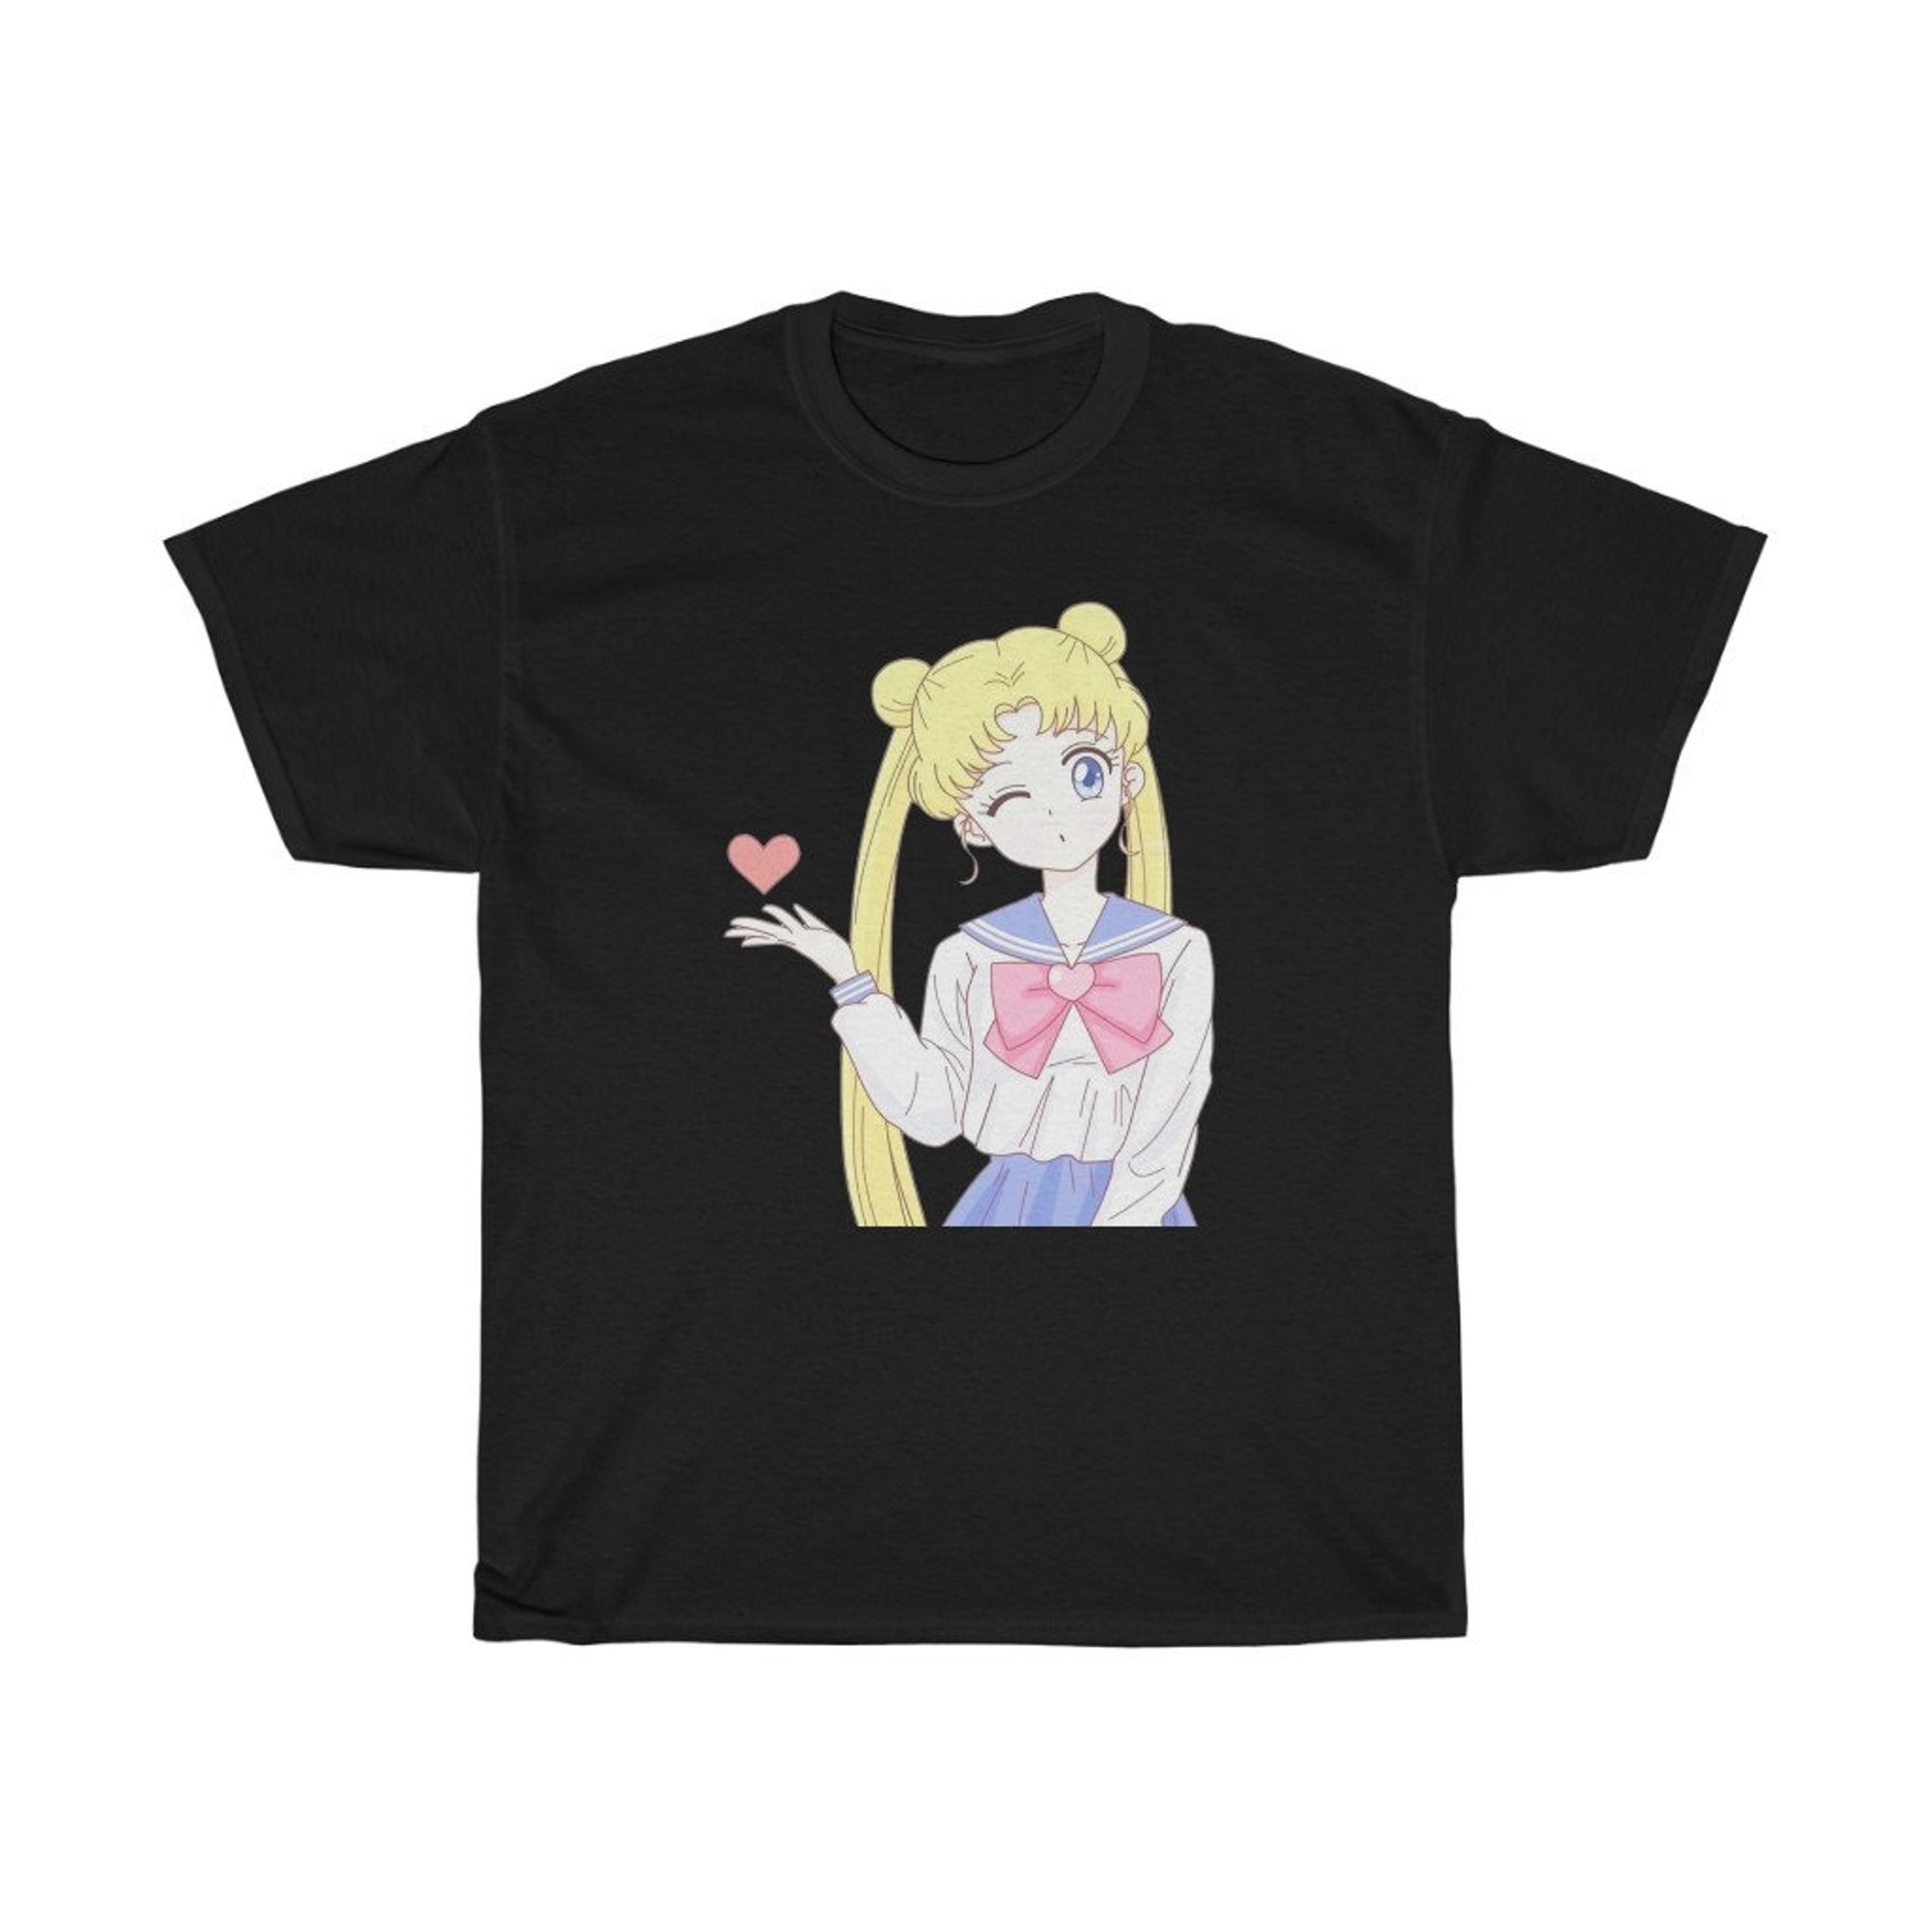 Discover Sailor Moon Shirt Harajuku Clothing Kawaii T Shirt